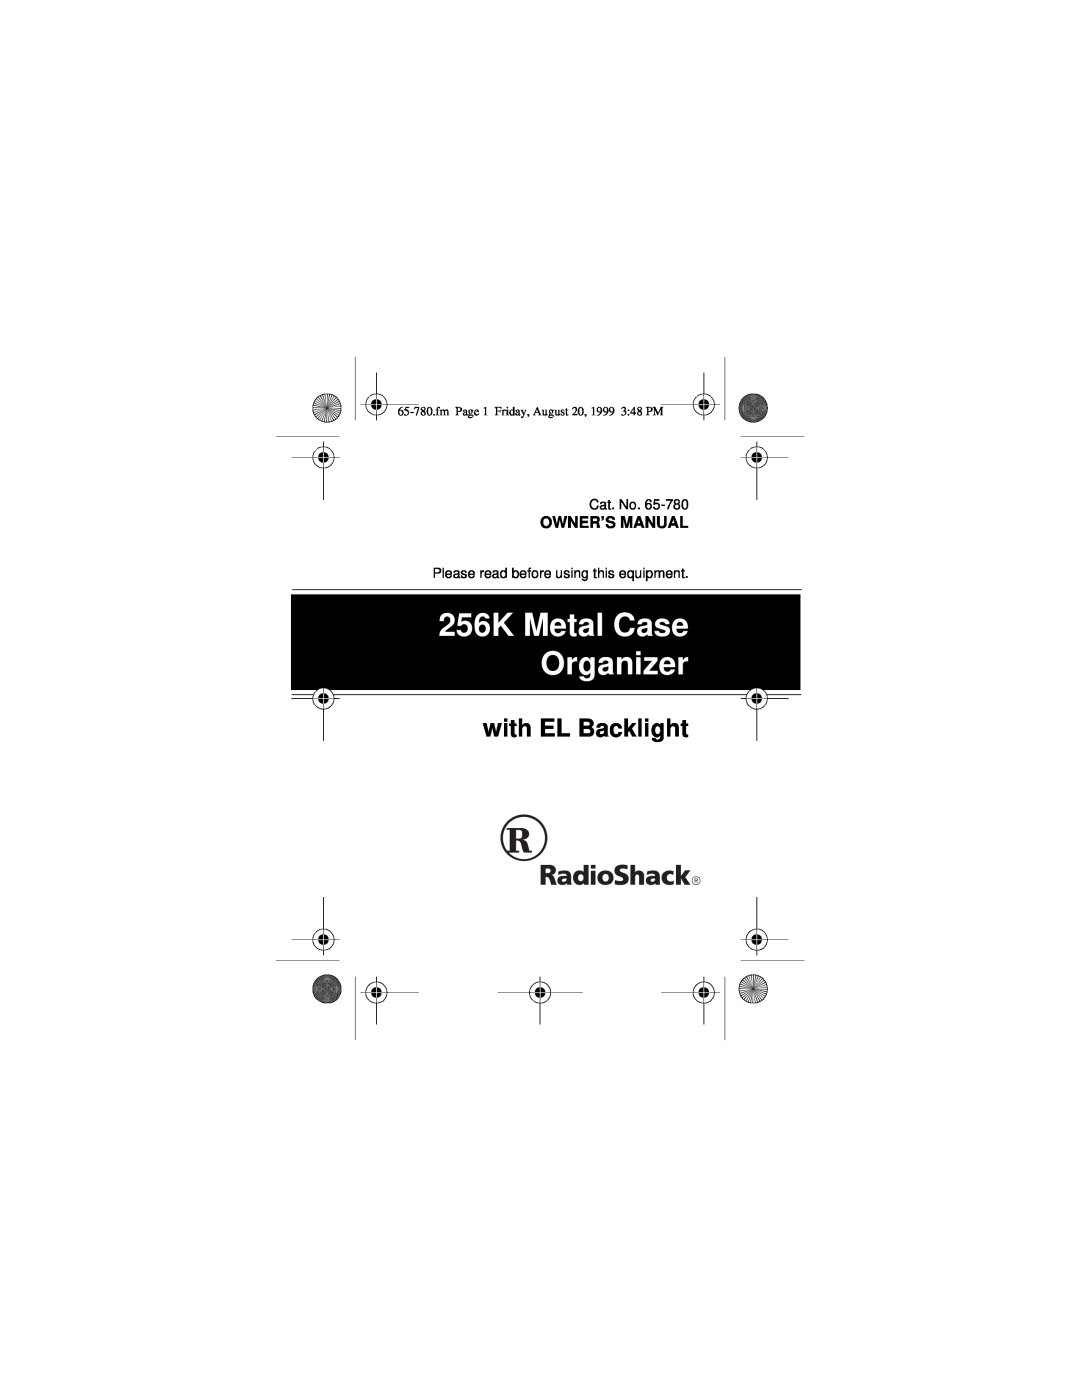 Samsung owner manual with EL Backlight, Owner’S Manual, 256K Metal Case Organizer 